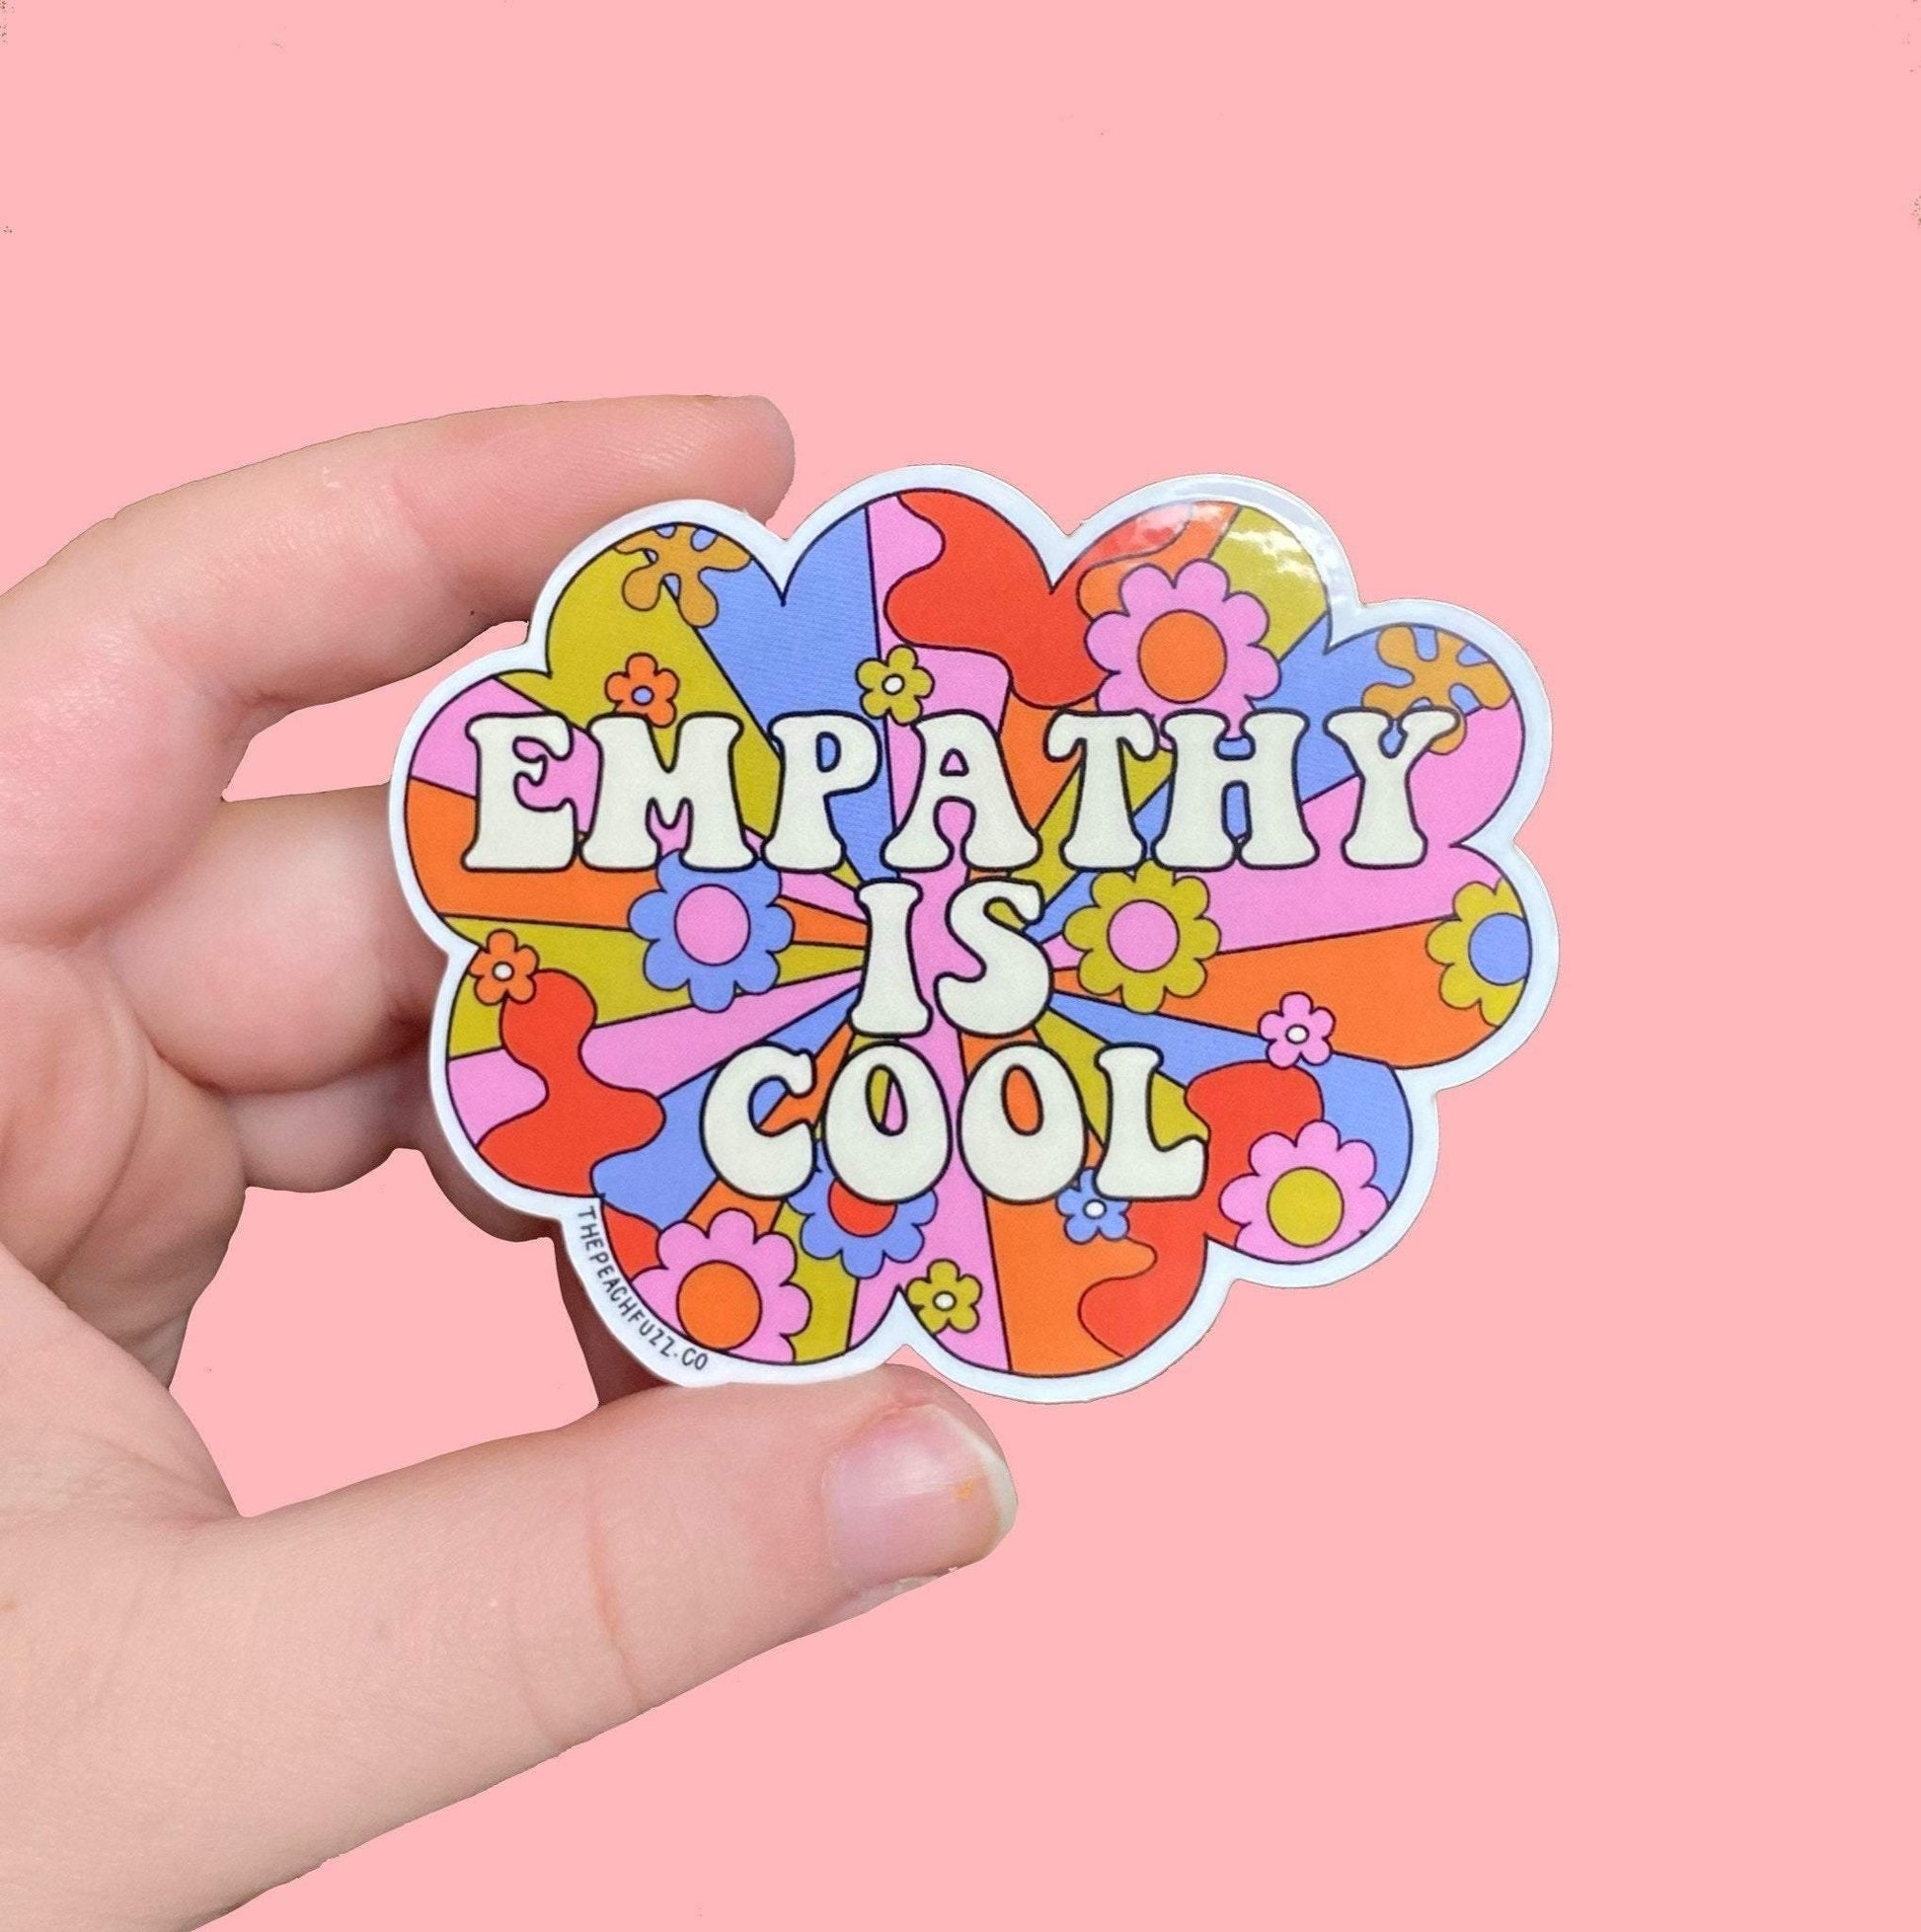 Empathy Is Cool Sticker - The Peach Fuzz